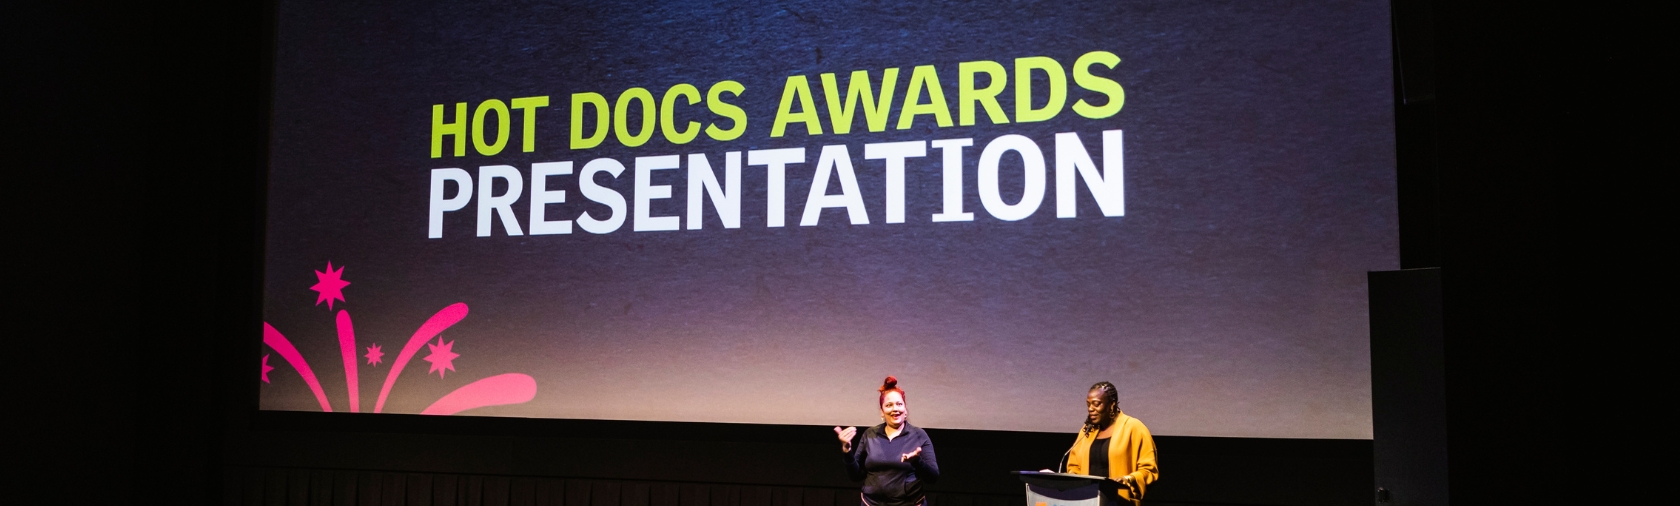 Hot Docs awards presentation